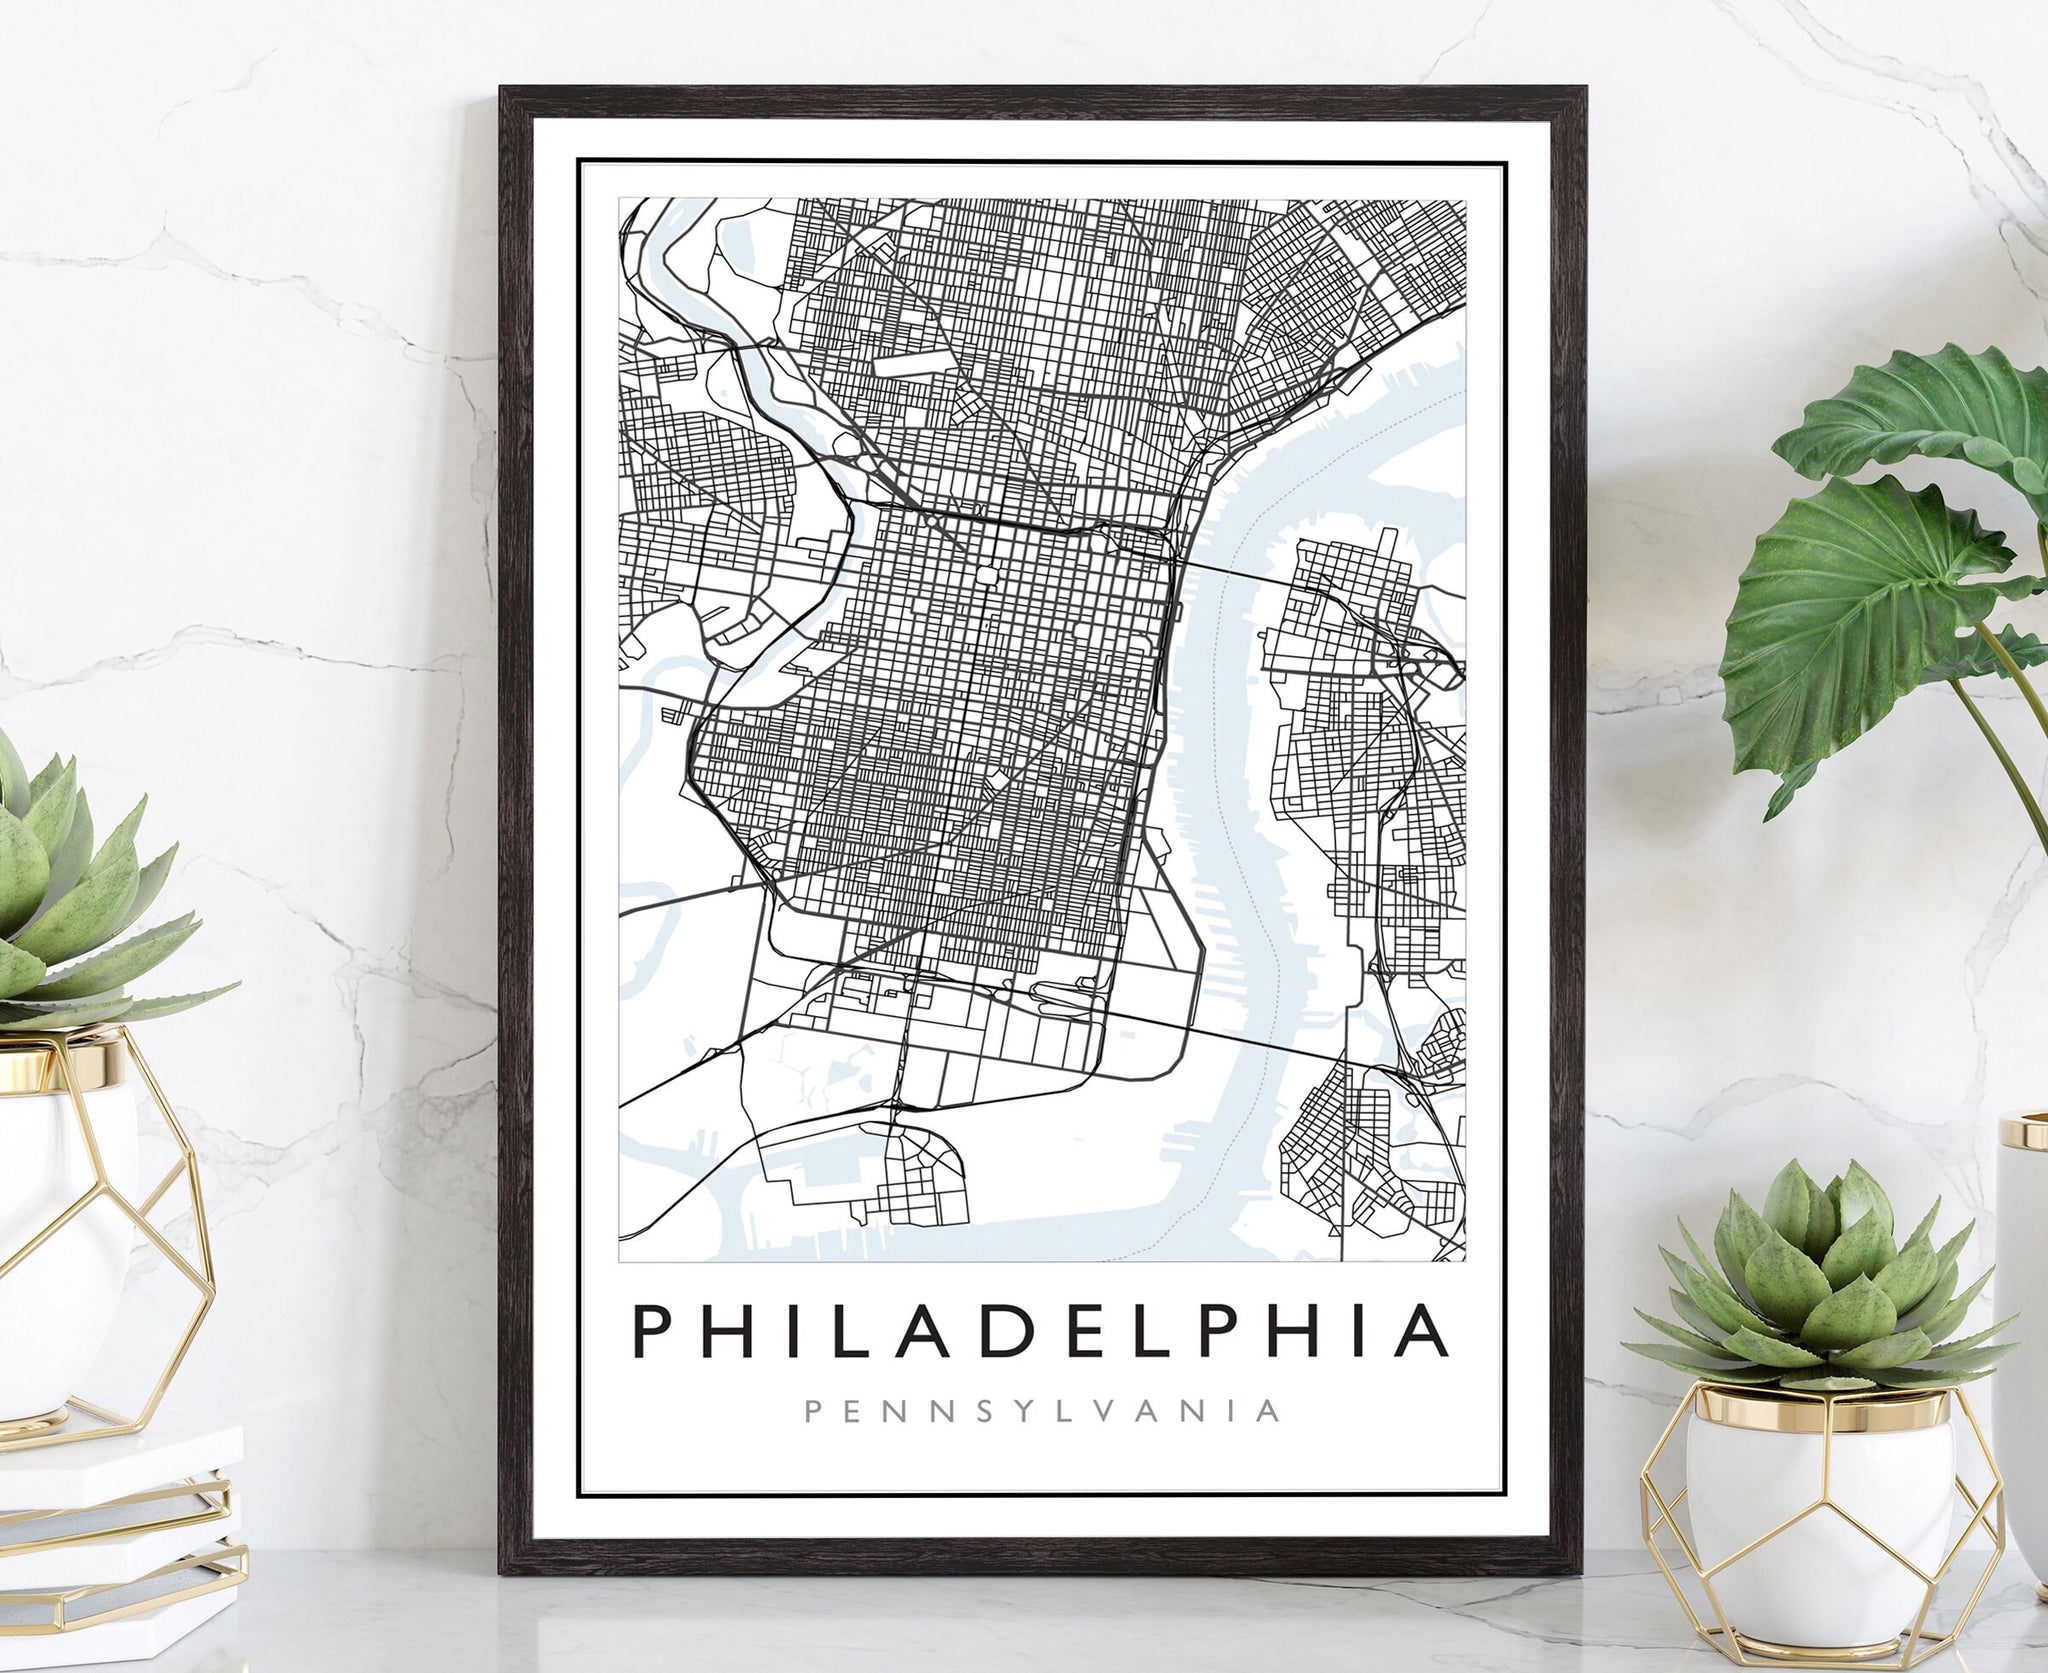 Philadelphia Pennsylvania City Map, Pennsylvania Road Map Poster, City Street Map Print, US City Modern City Map, Home Office Wall Art Decor